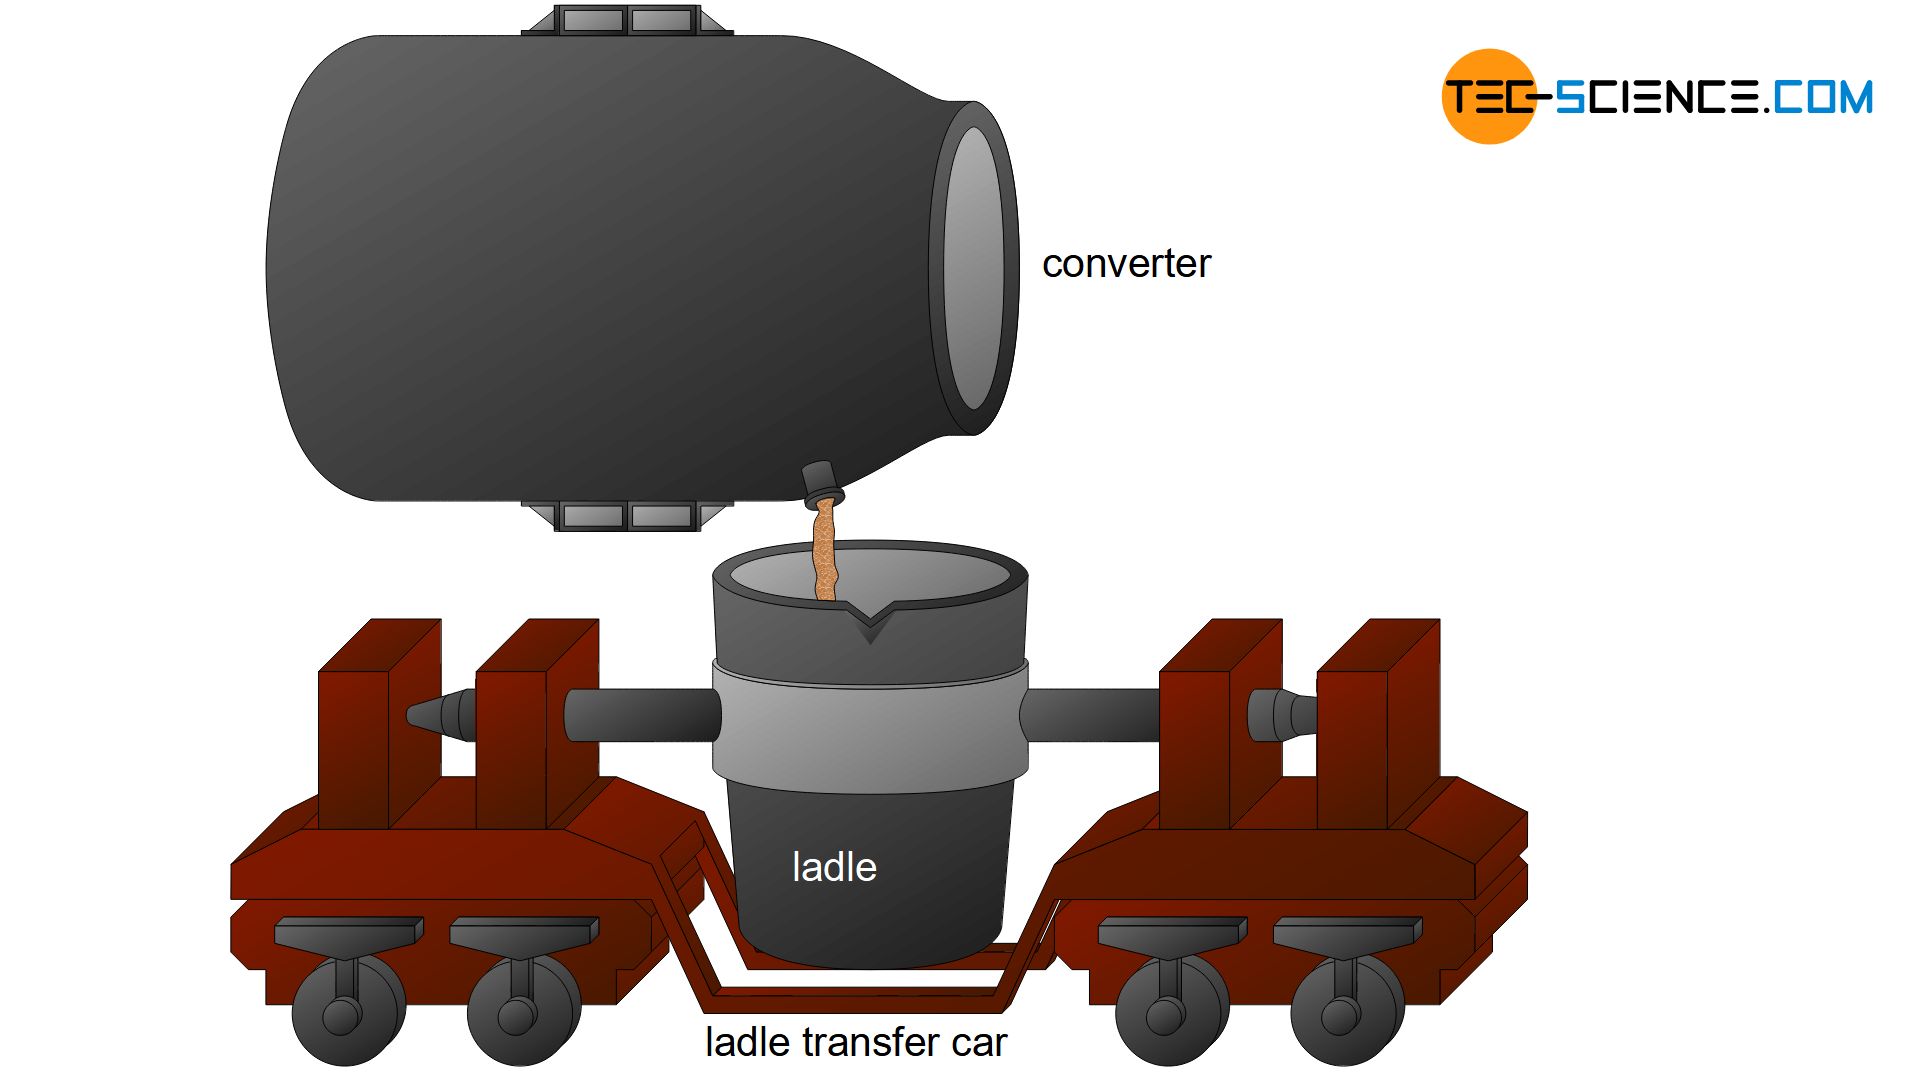 Ladle transfer car